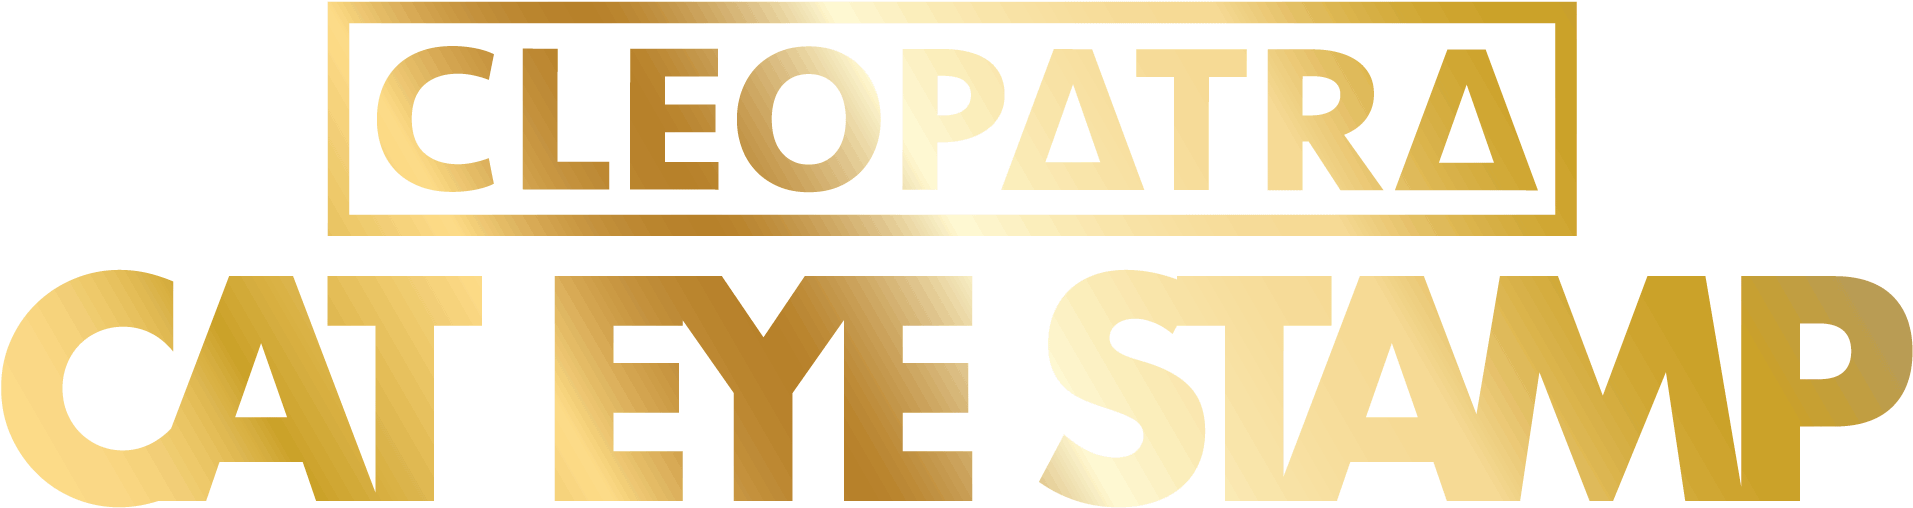 Cleopatra Cat Eye Stamp Poster